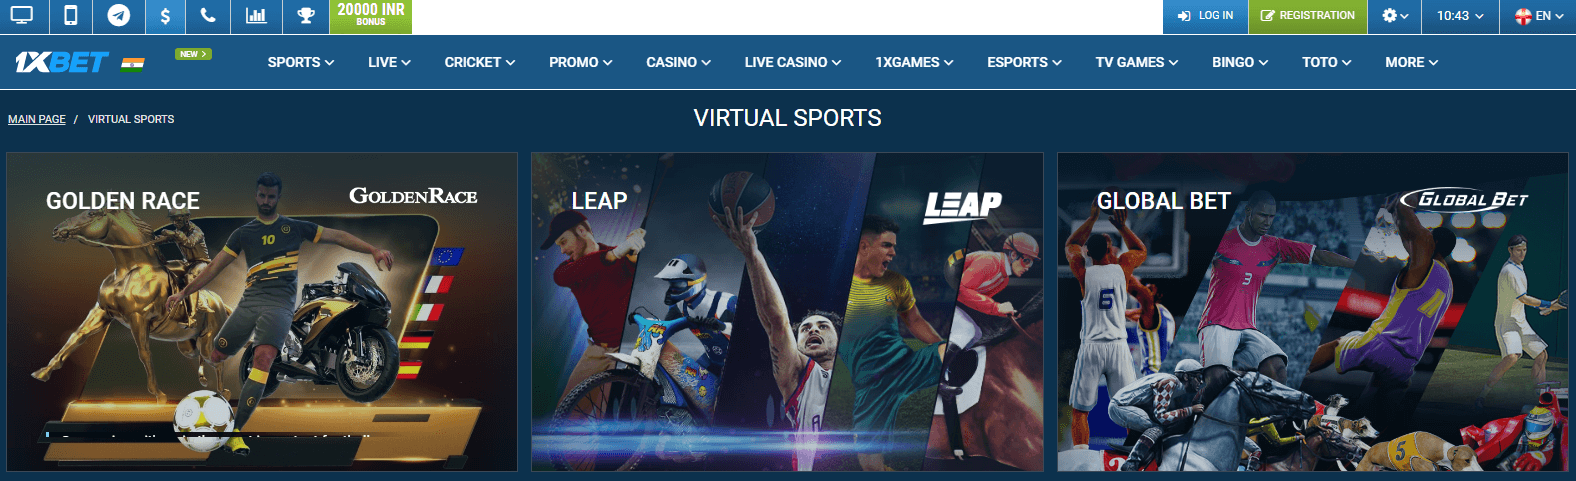 1xBet Virtual Sports Games